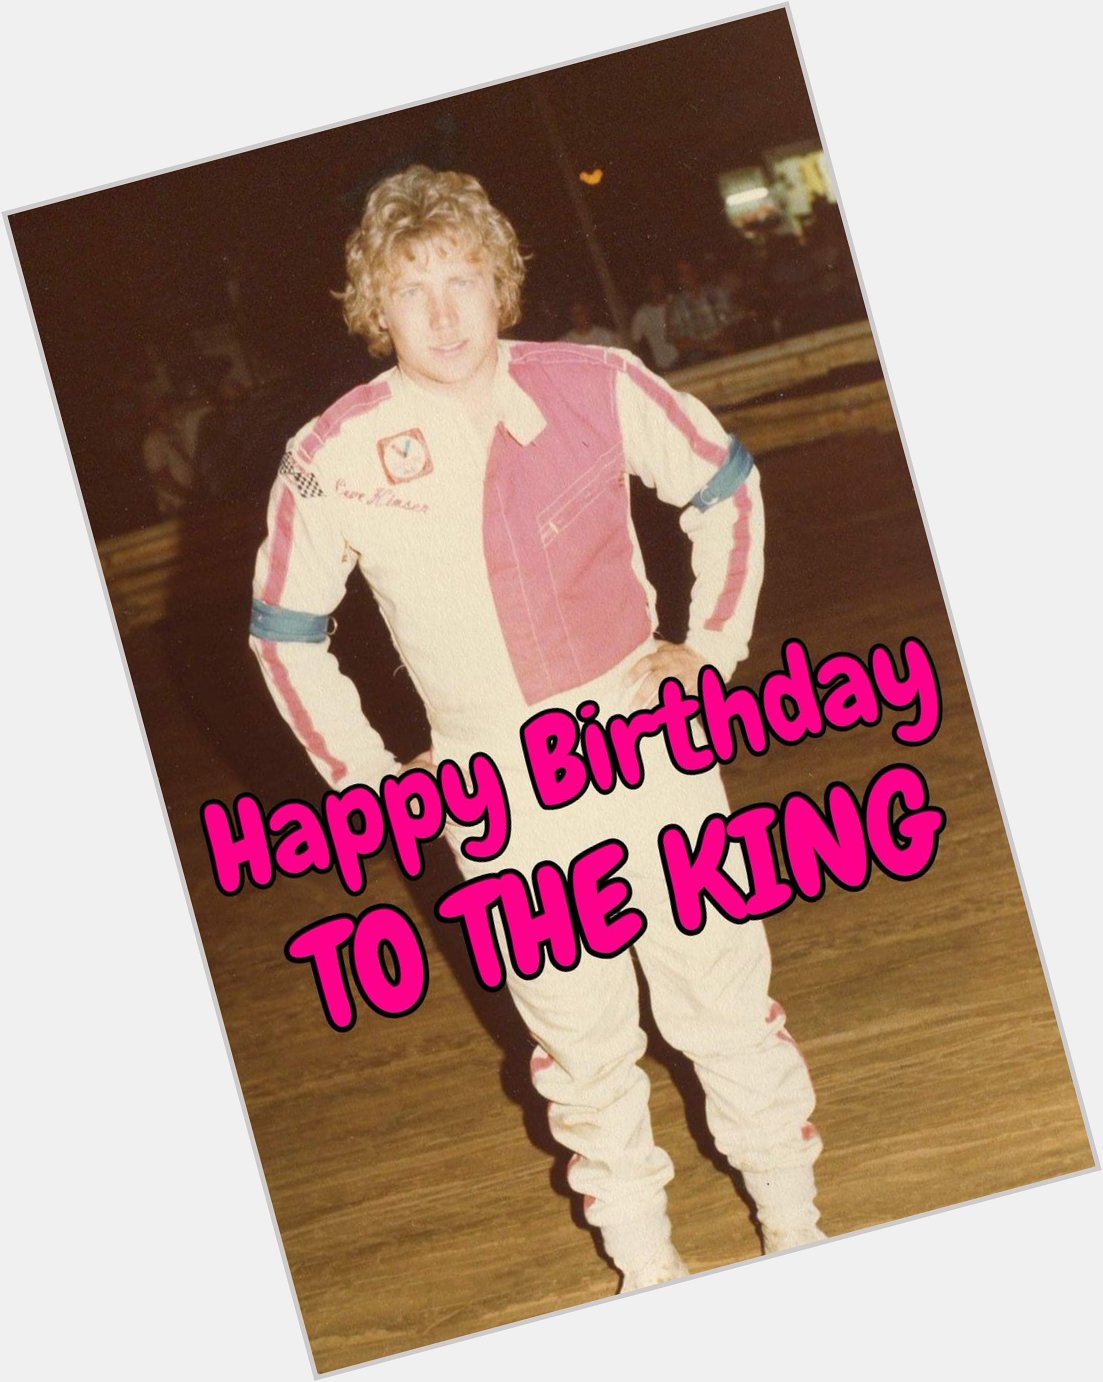 Happy Birthday to the King Steve Kinser 